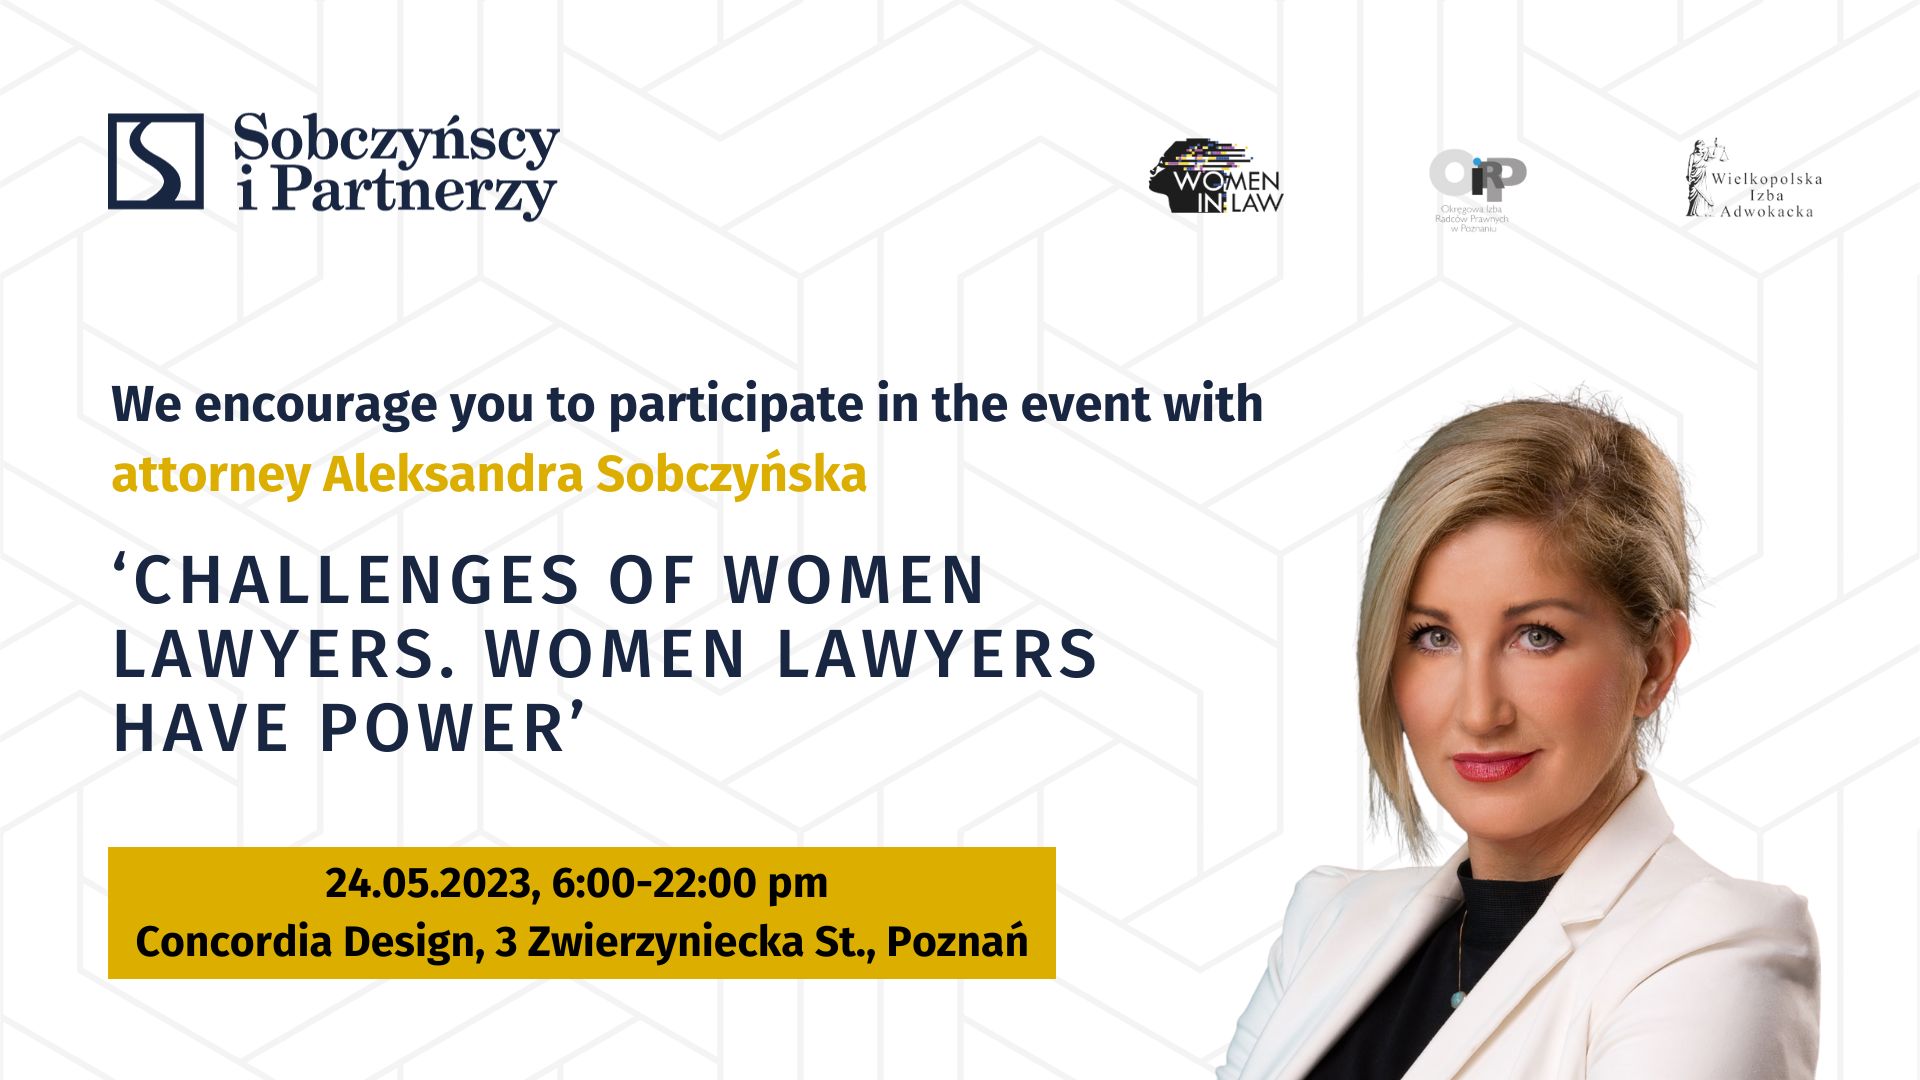 Aleksandra Sobczyńska a panelist at the meeting “Challenges of Women Lawyers. Women Lawyers Have Power”